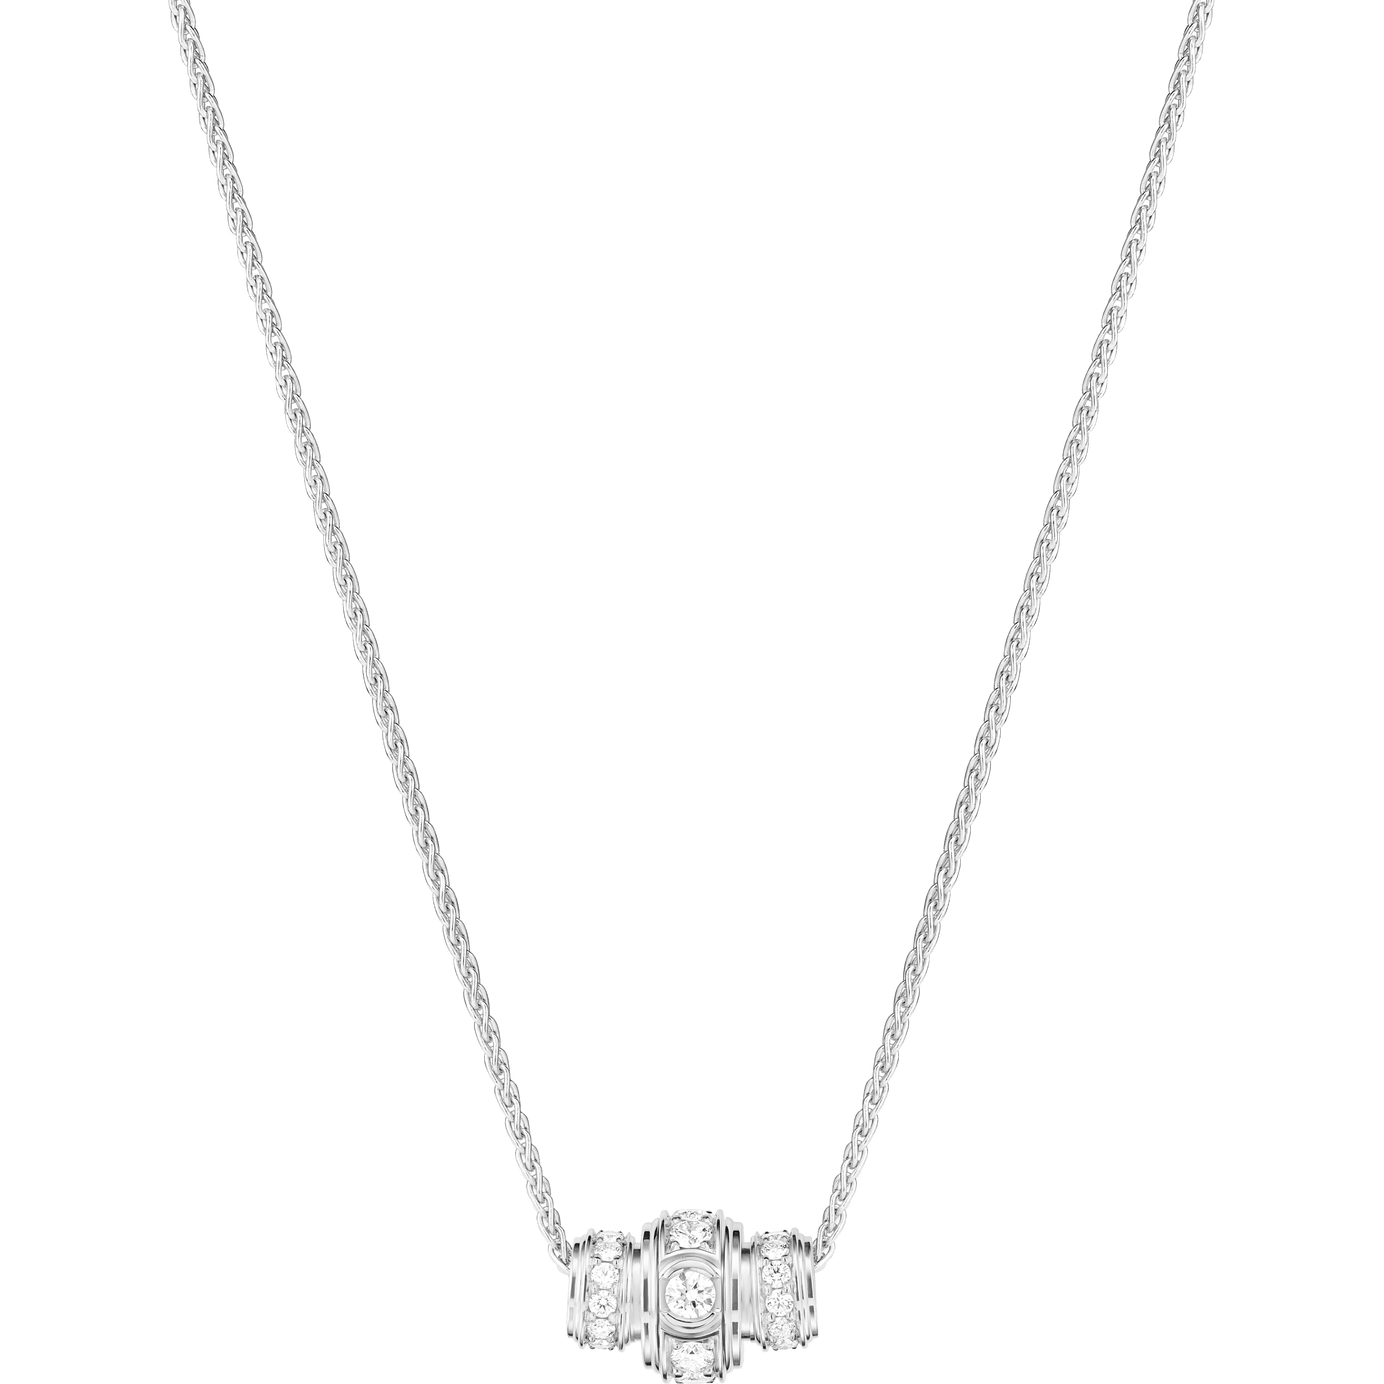 White gold Diamond Pendant G33H0700 - Piaget Luxury Jewelry Online